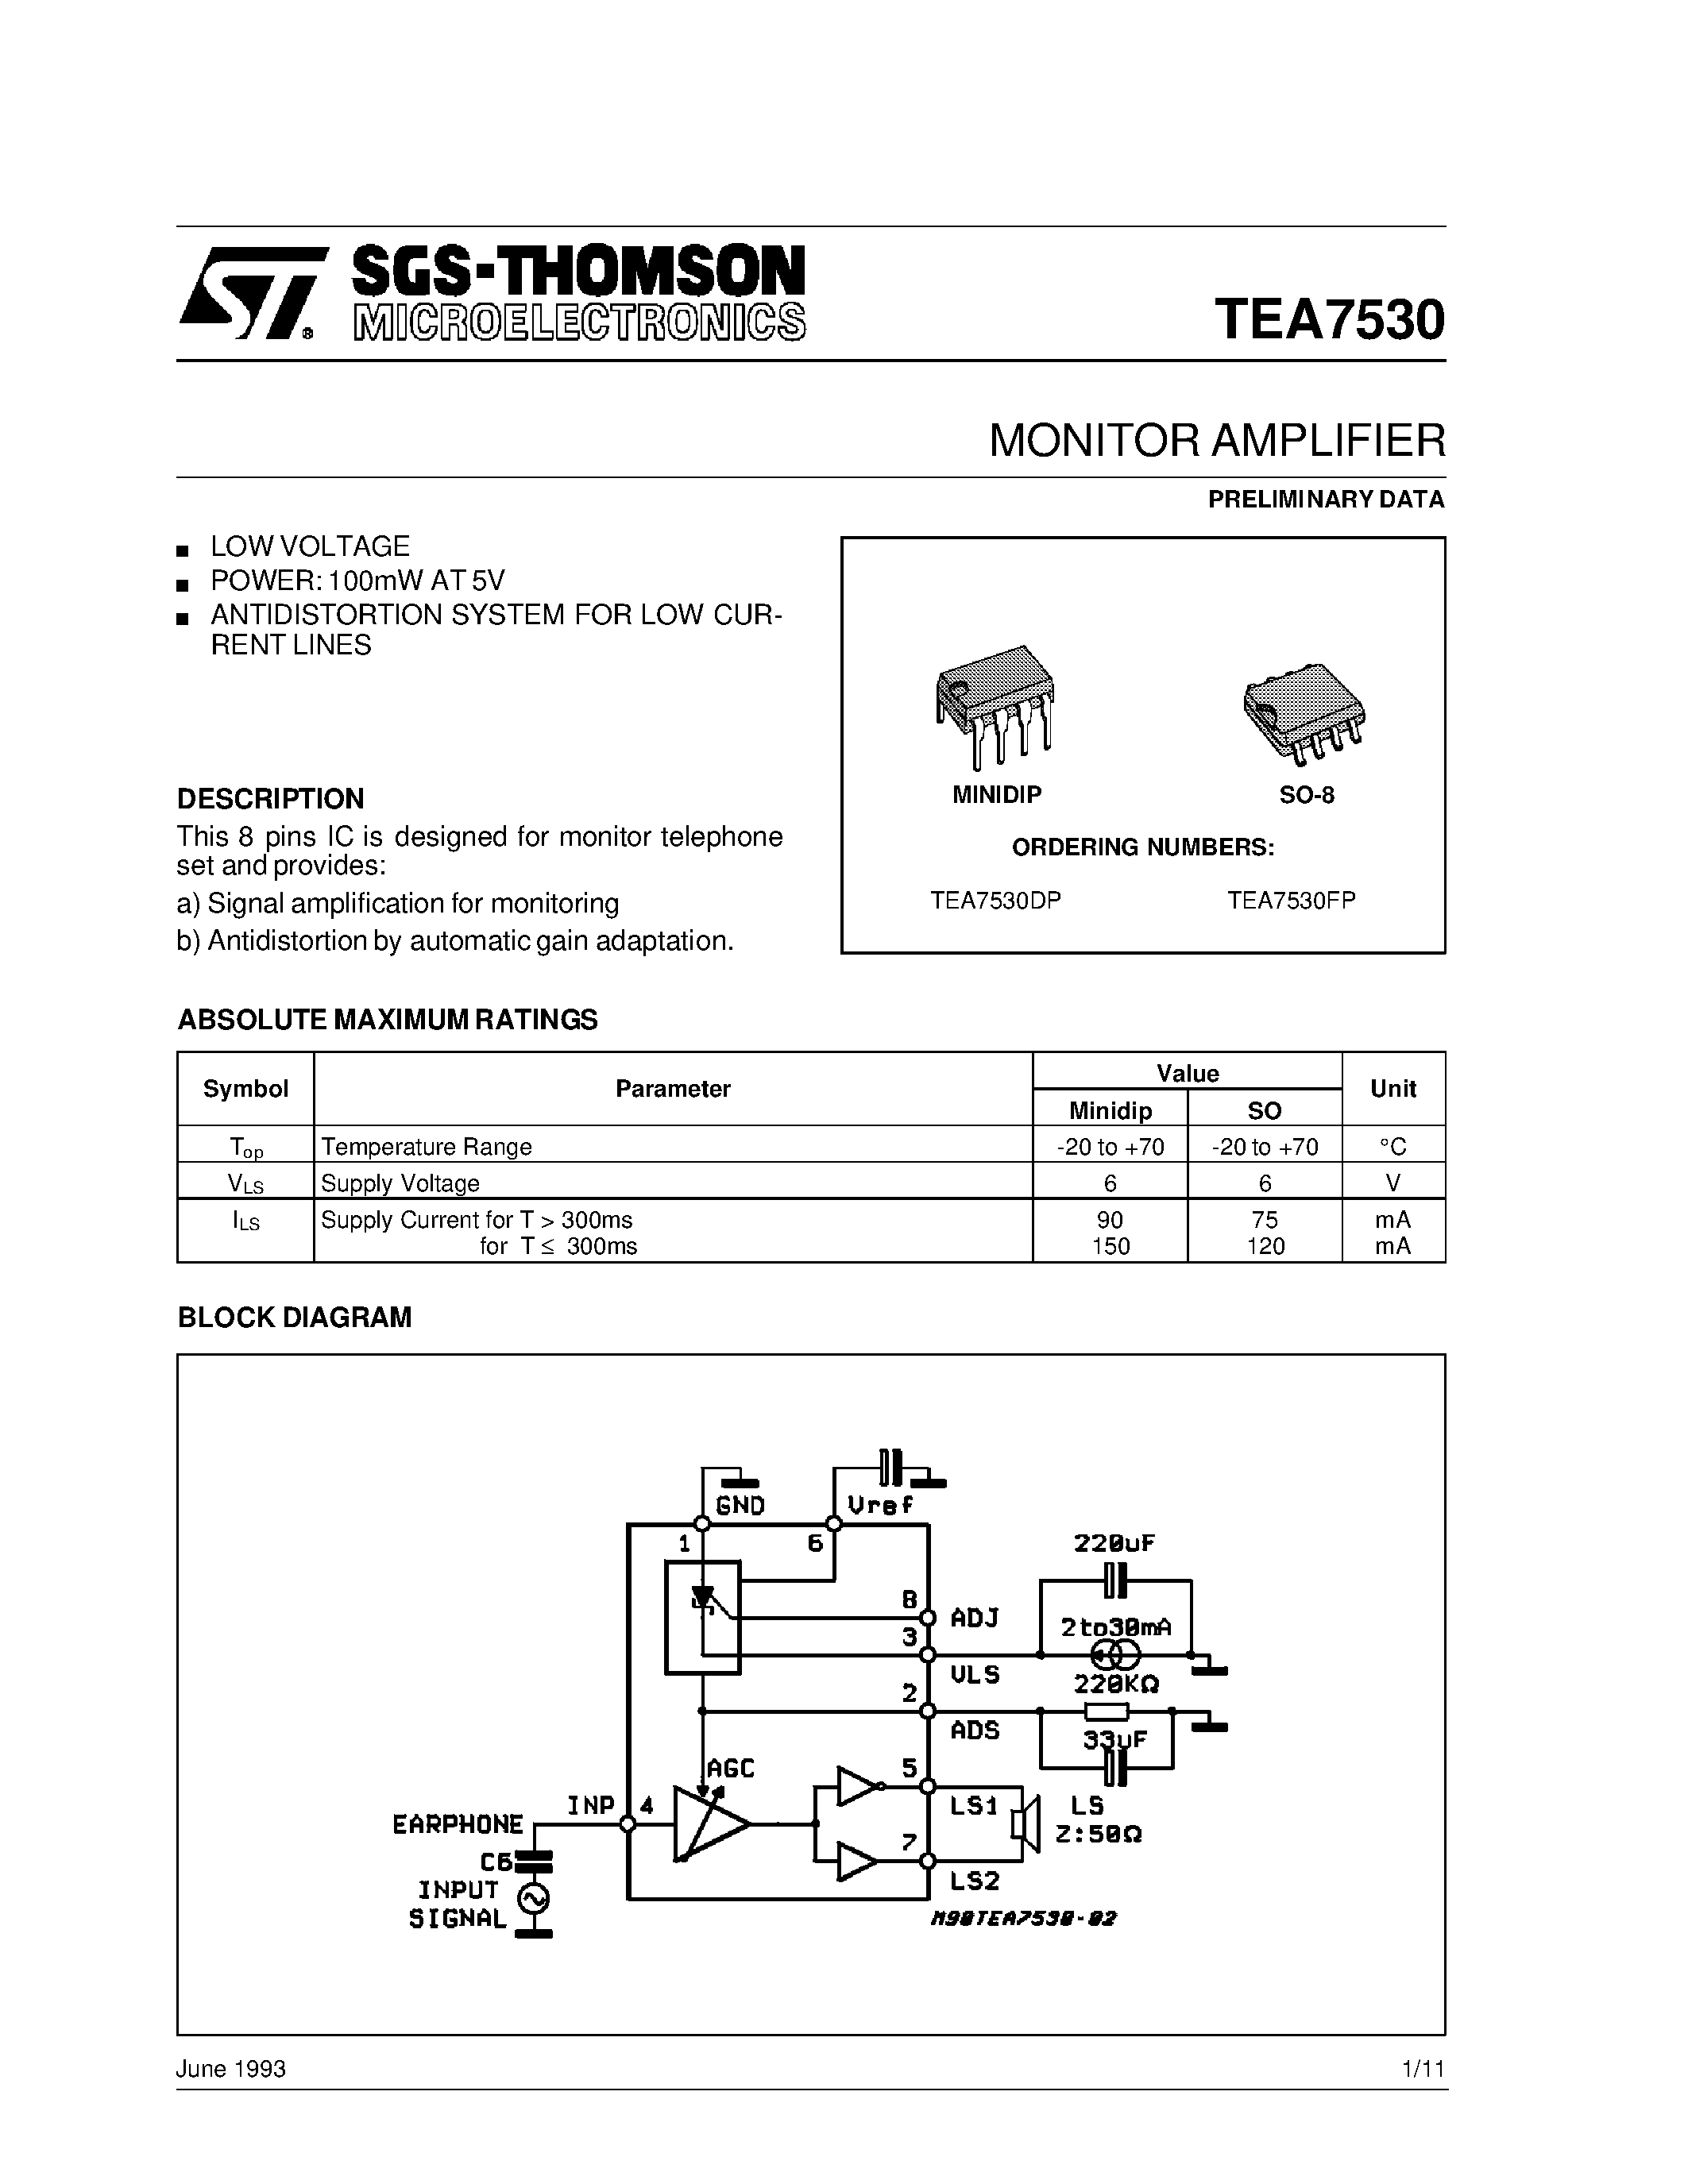 Datasheet TEA7530FP - MONITOR AMPLIFIER page 1